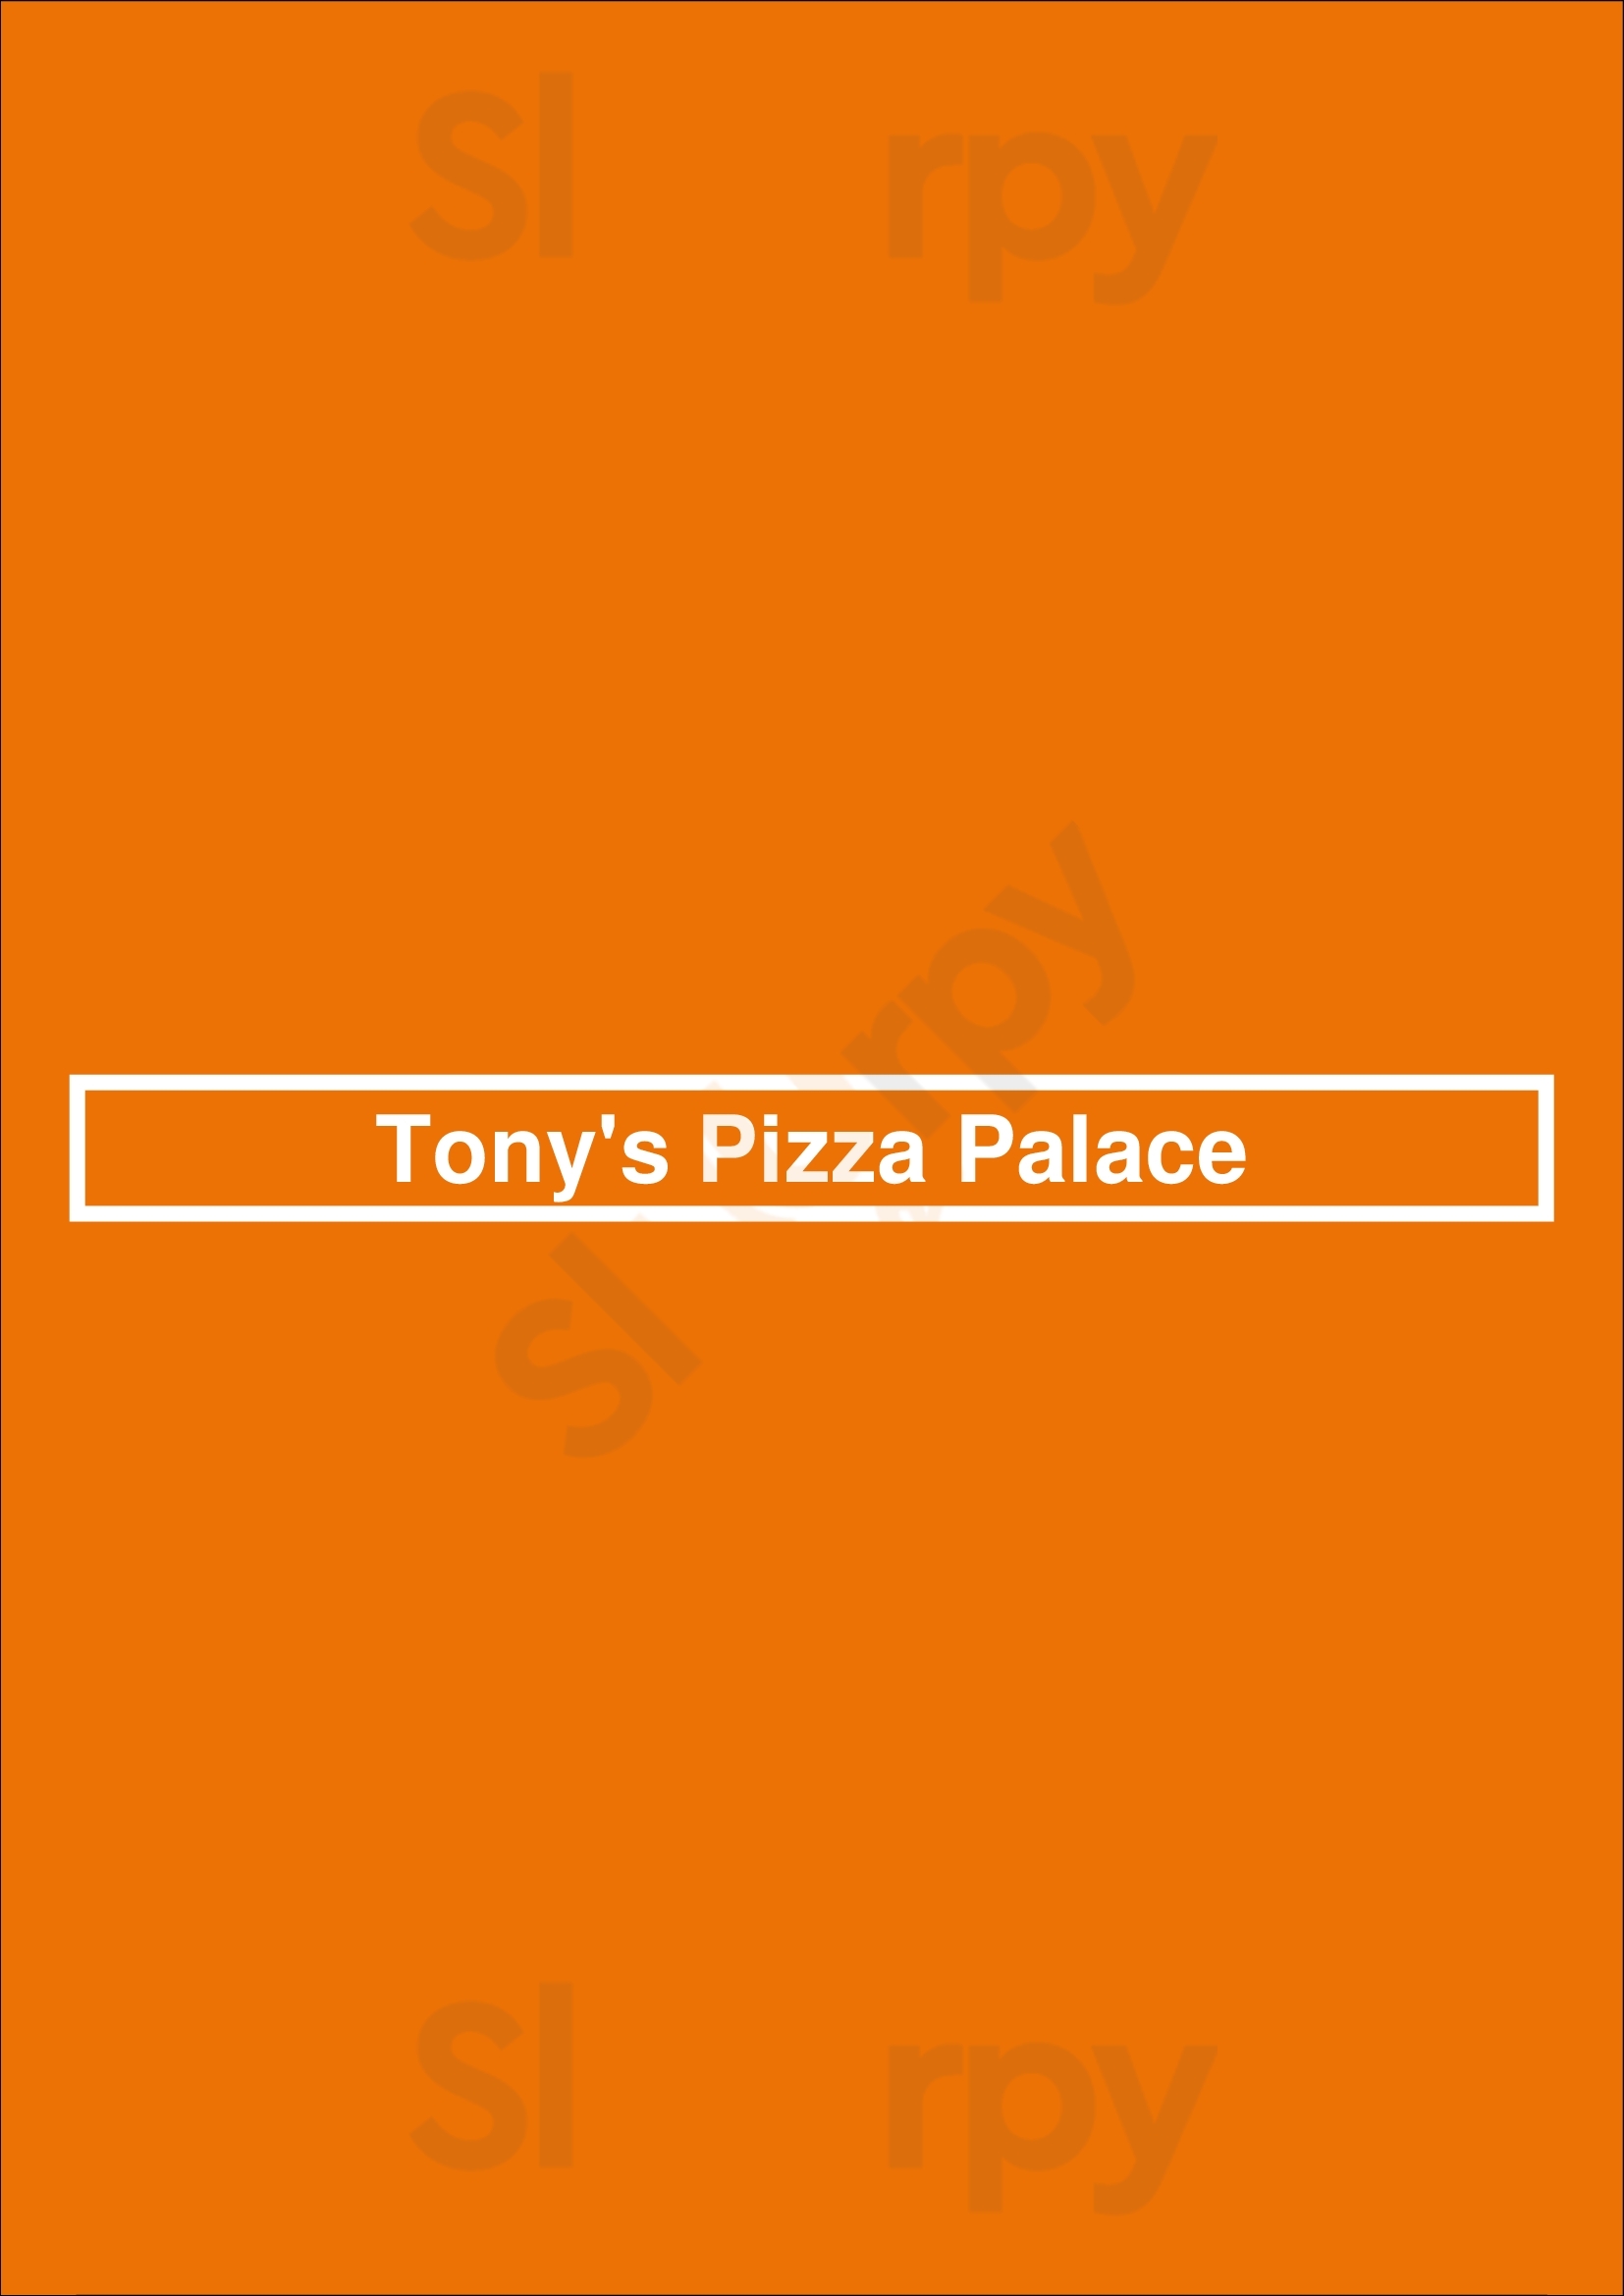 Tony's Pizza Palace Edmonton Menu - 1